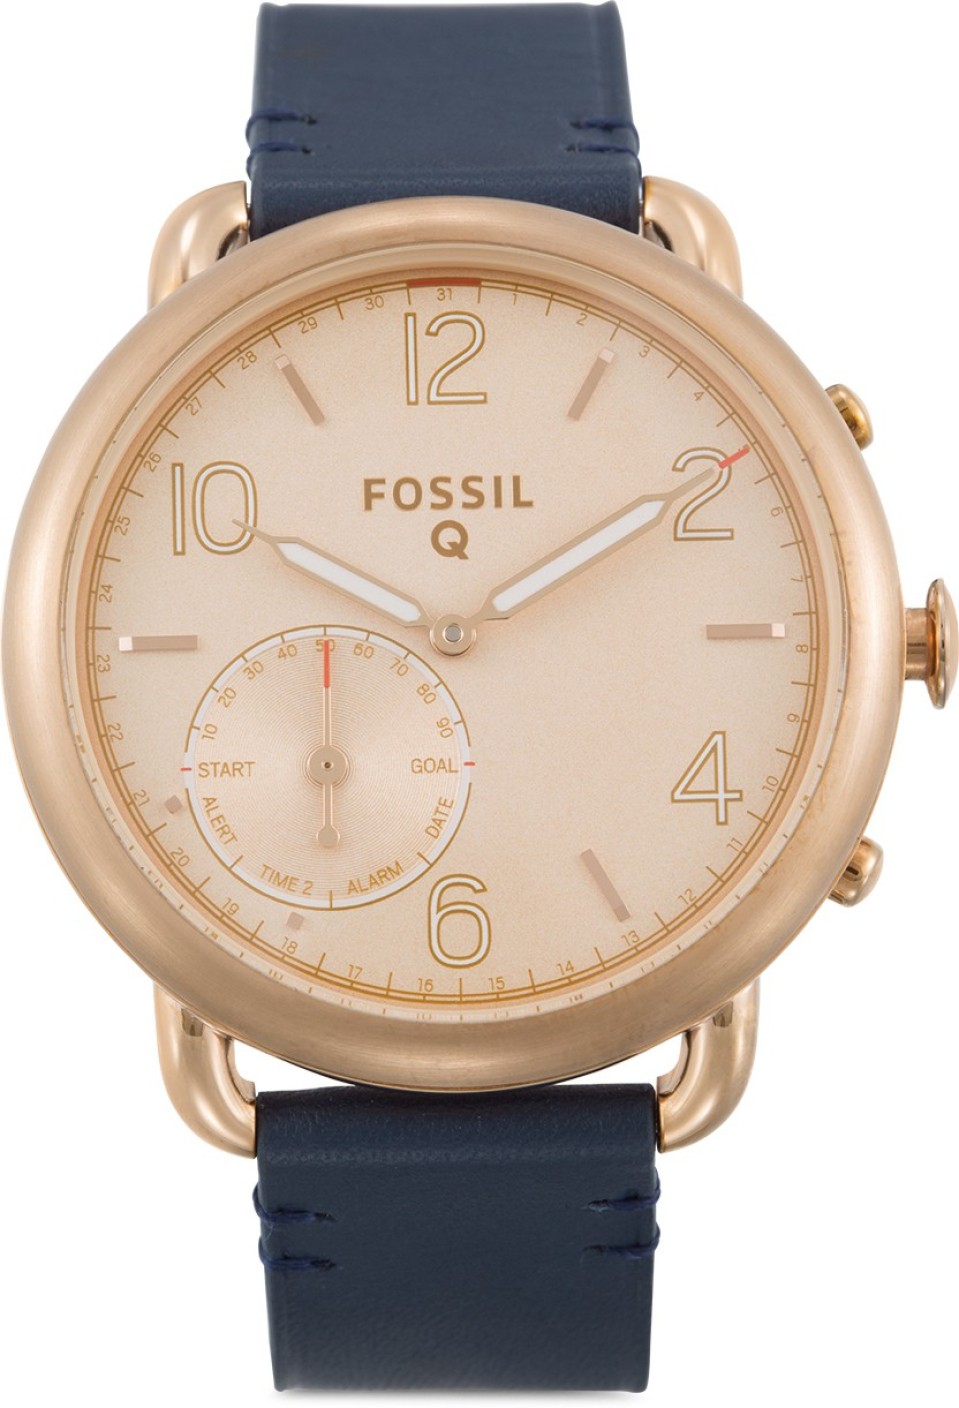 Fossil FTW1128 Hybrid Watch - For Women - Buy Fossil FTW1128 Hybrid ...